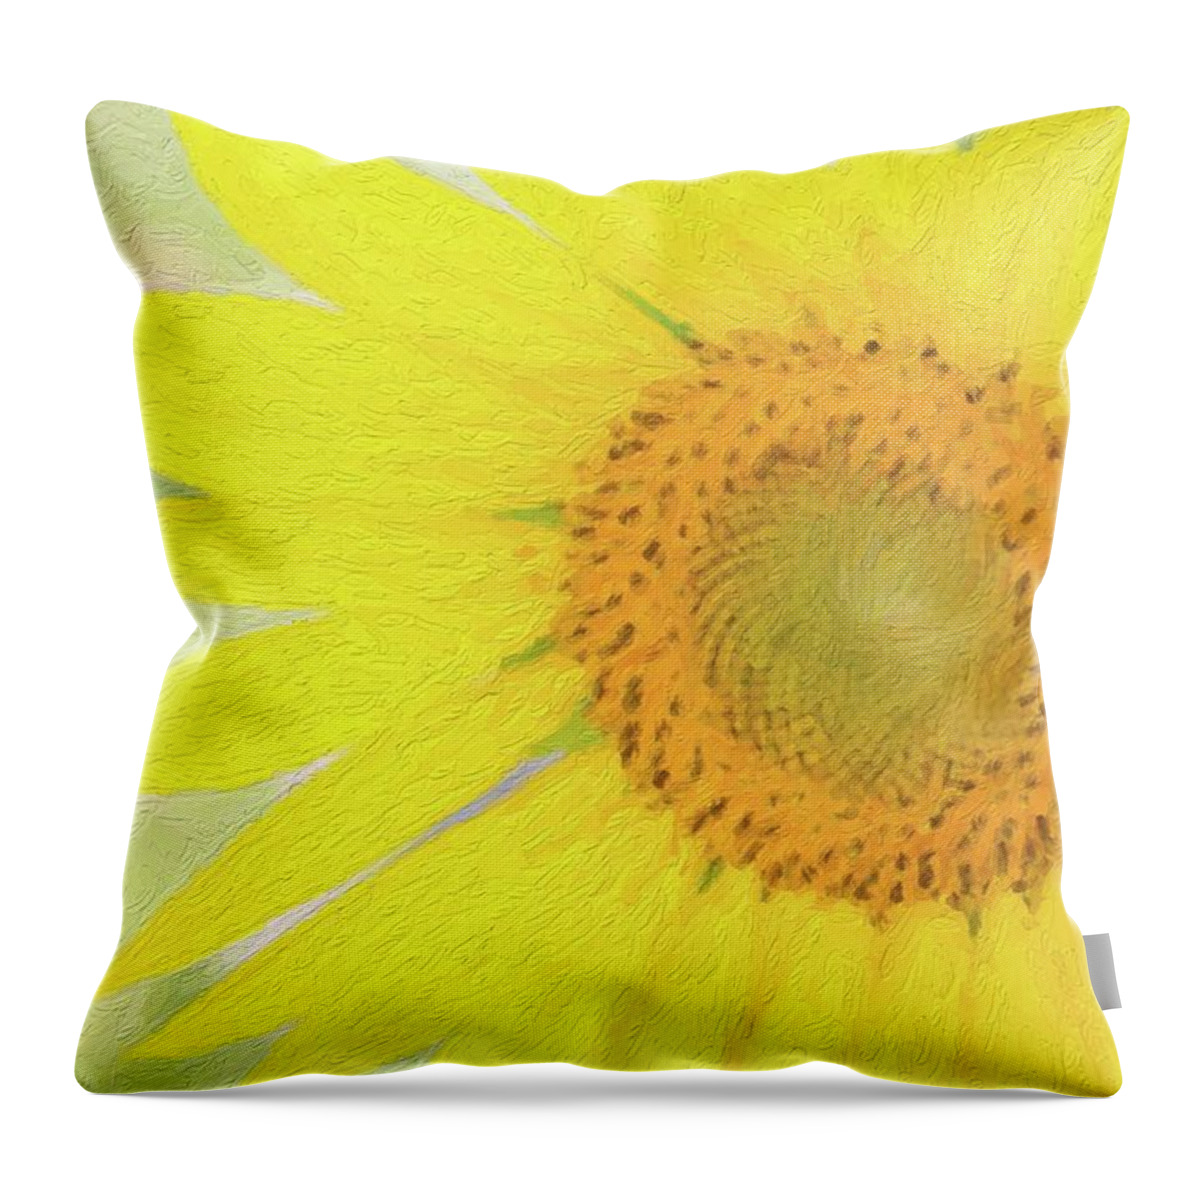 Sunflower Throw Pillow featuring the photograph Golden Sunflower Painting by Carolyn Ann Ryan